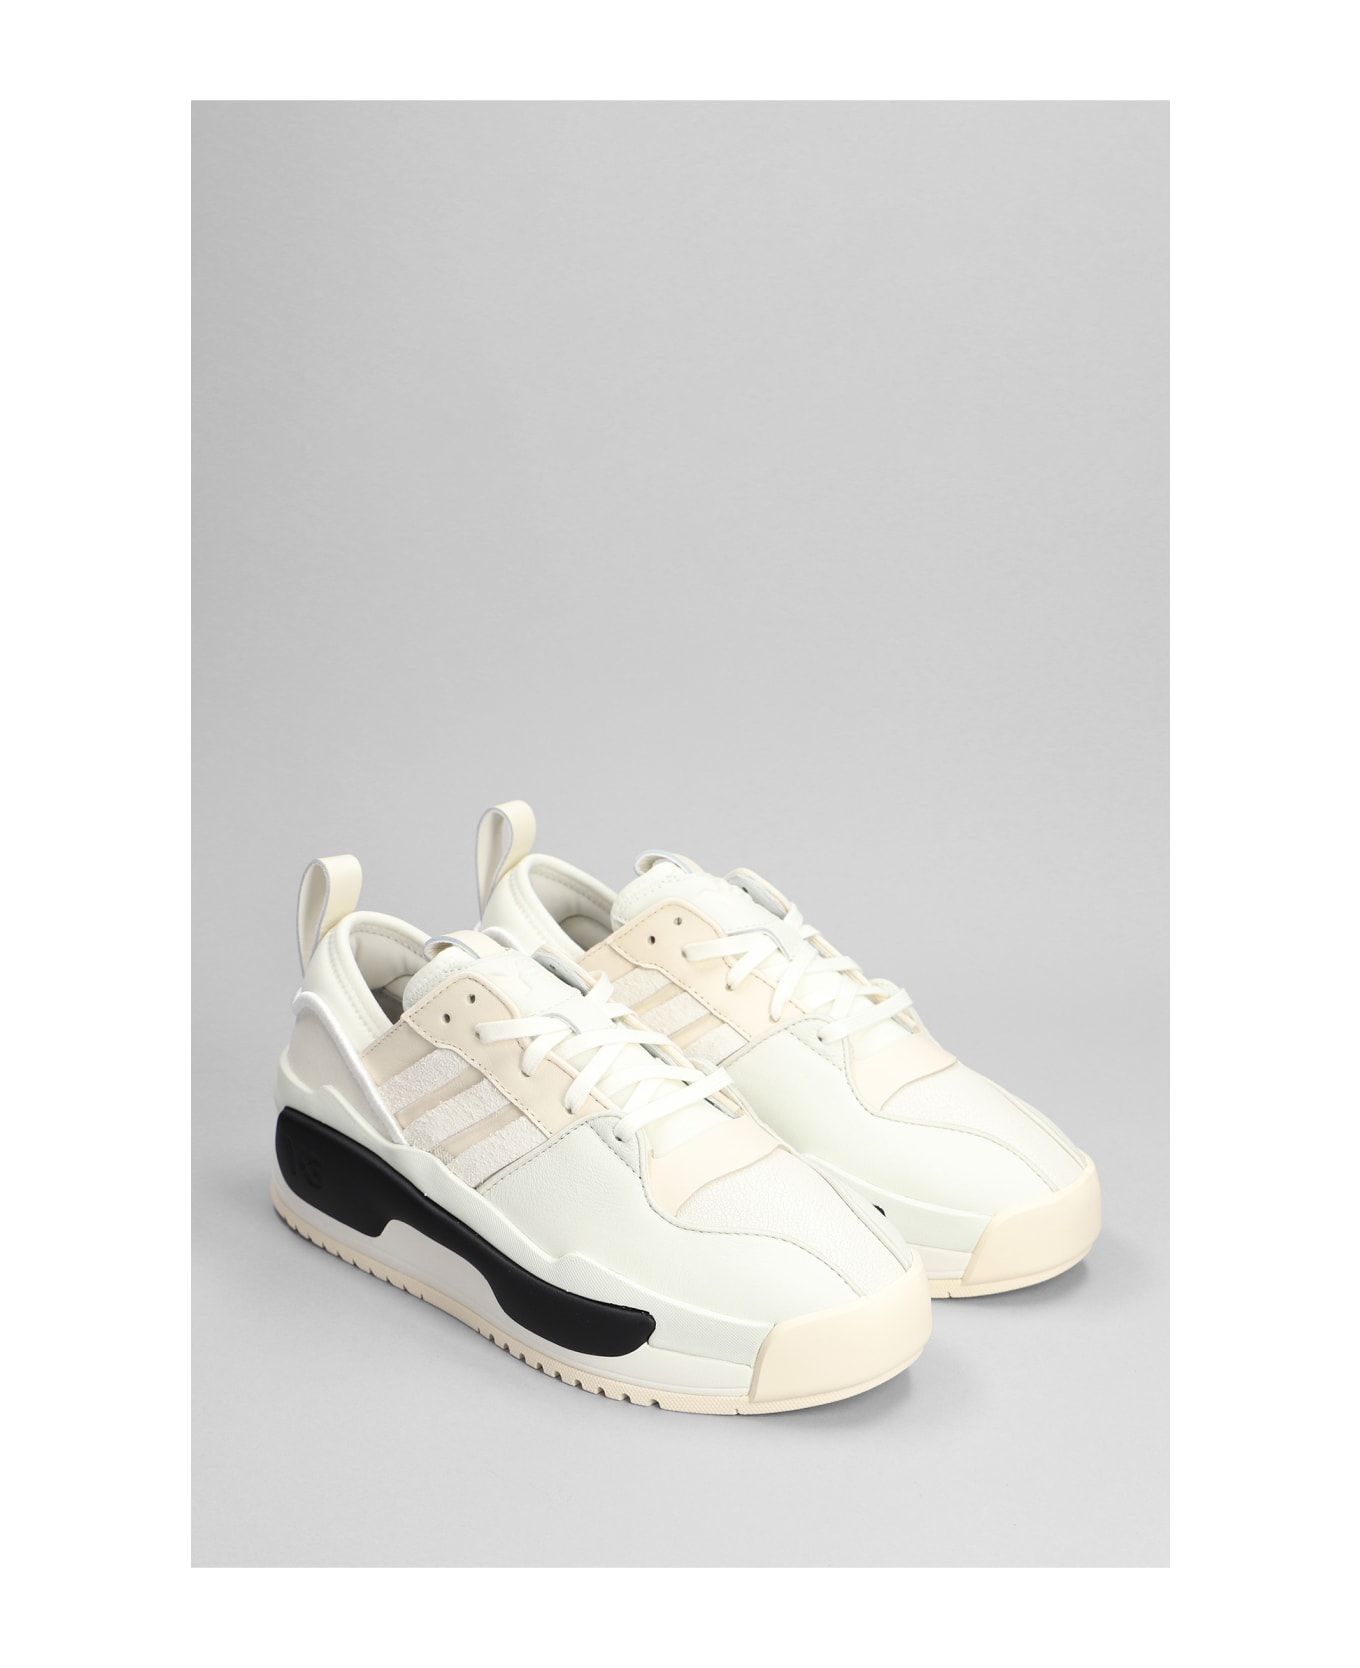 Y-3 Rivalry White Leather Sneakers - OFF WHITE WONDER WHITE (White)